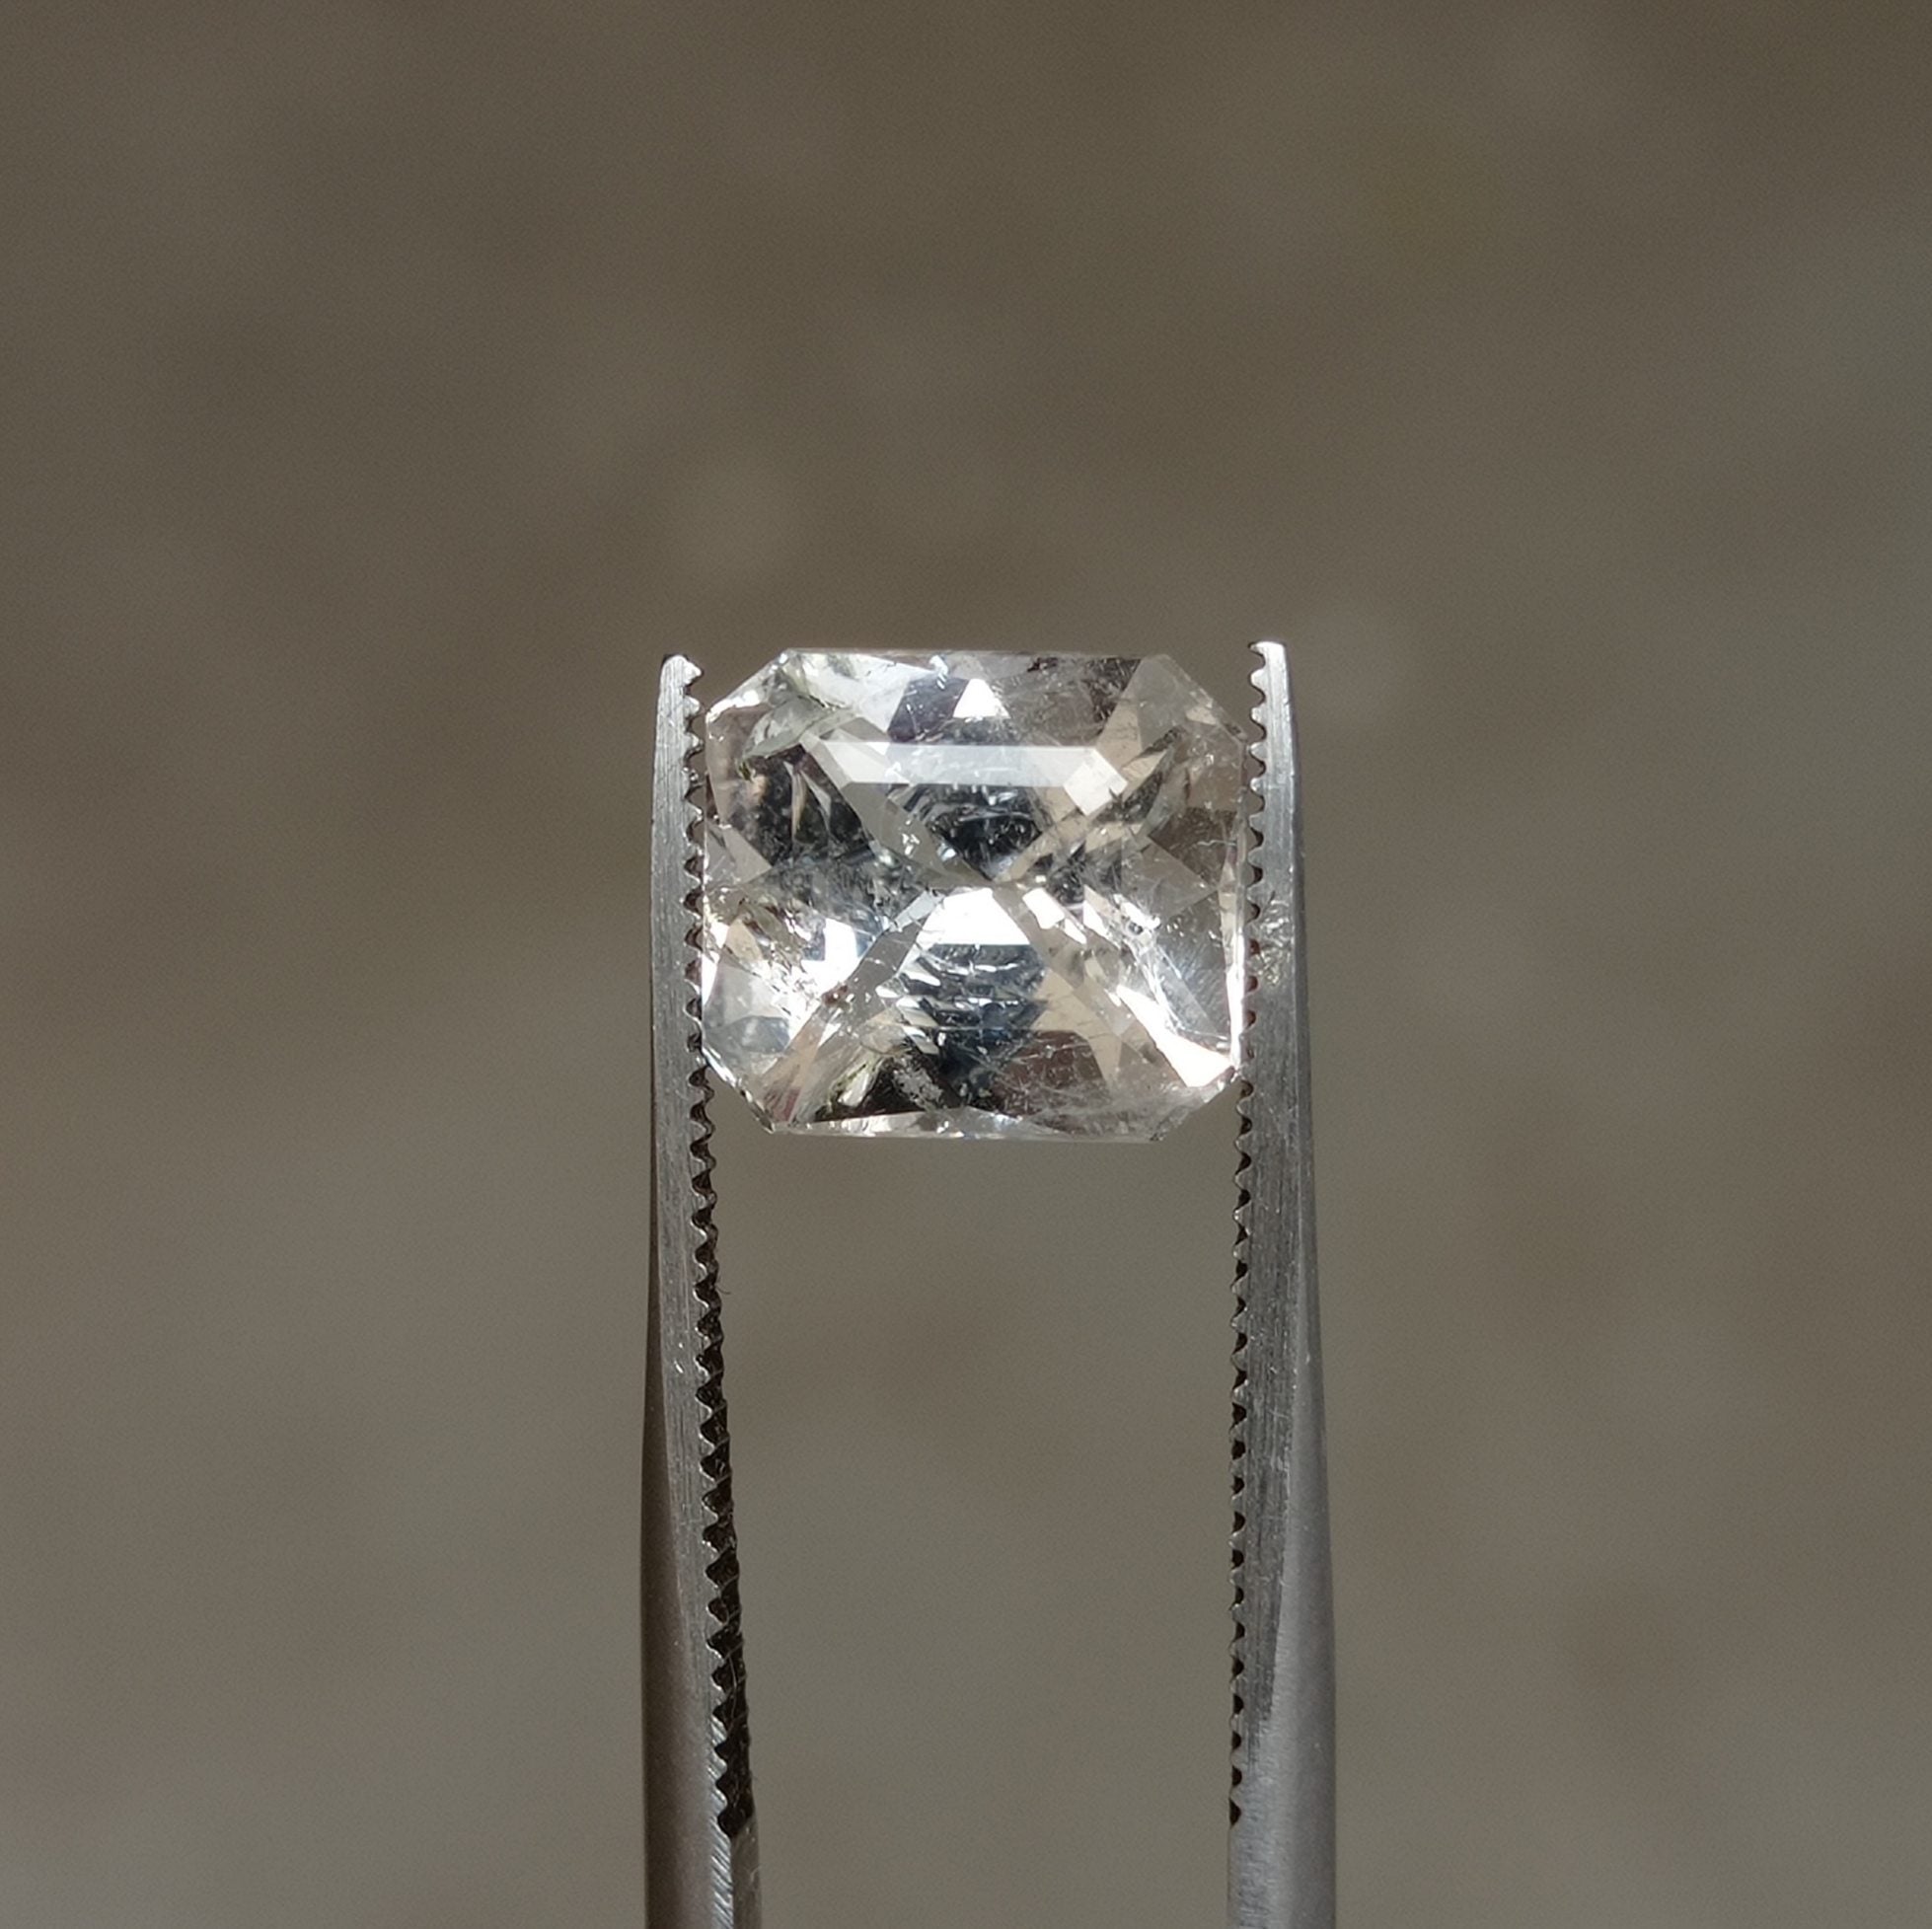 4.5ctTopaz - Whie Topaz Faceted Gemstone - Novemeber Birthstone - White Pukhraj - 9.7x8.5mm